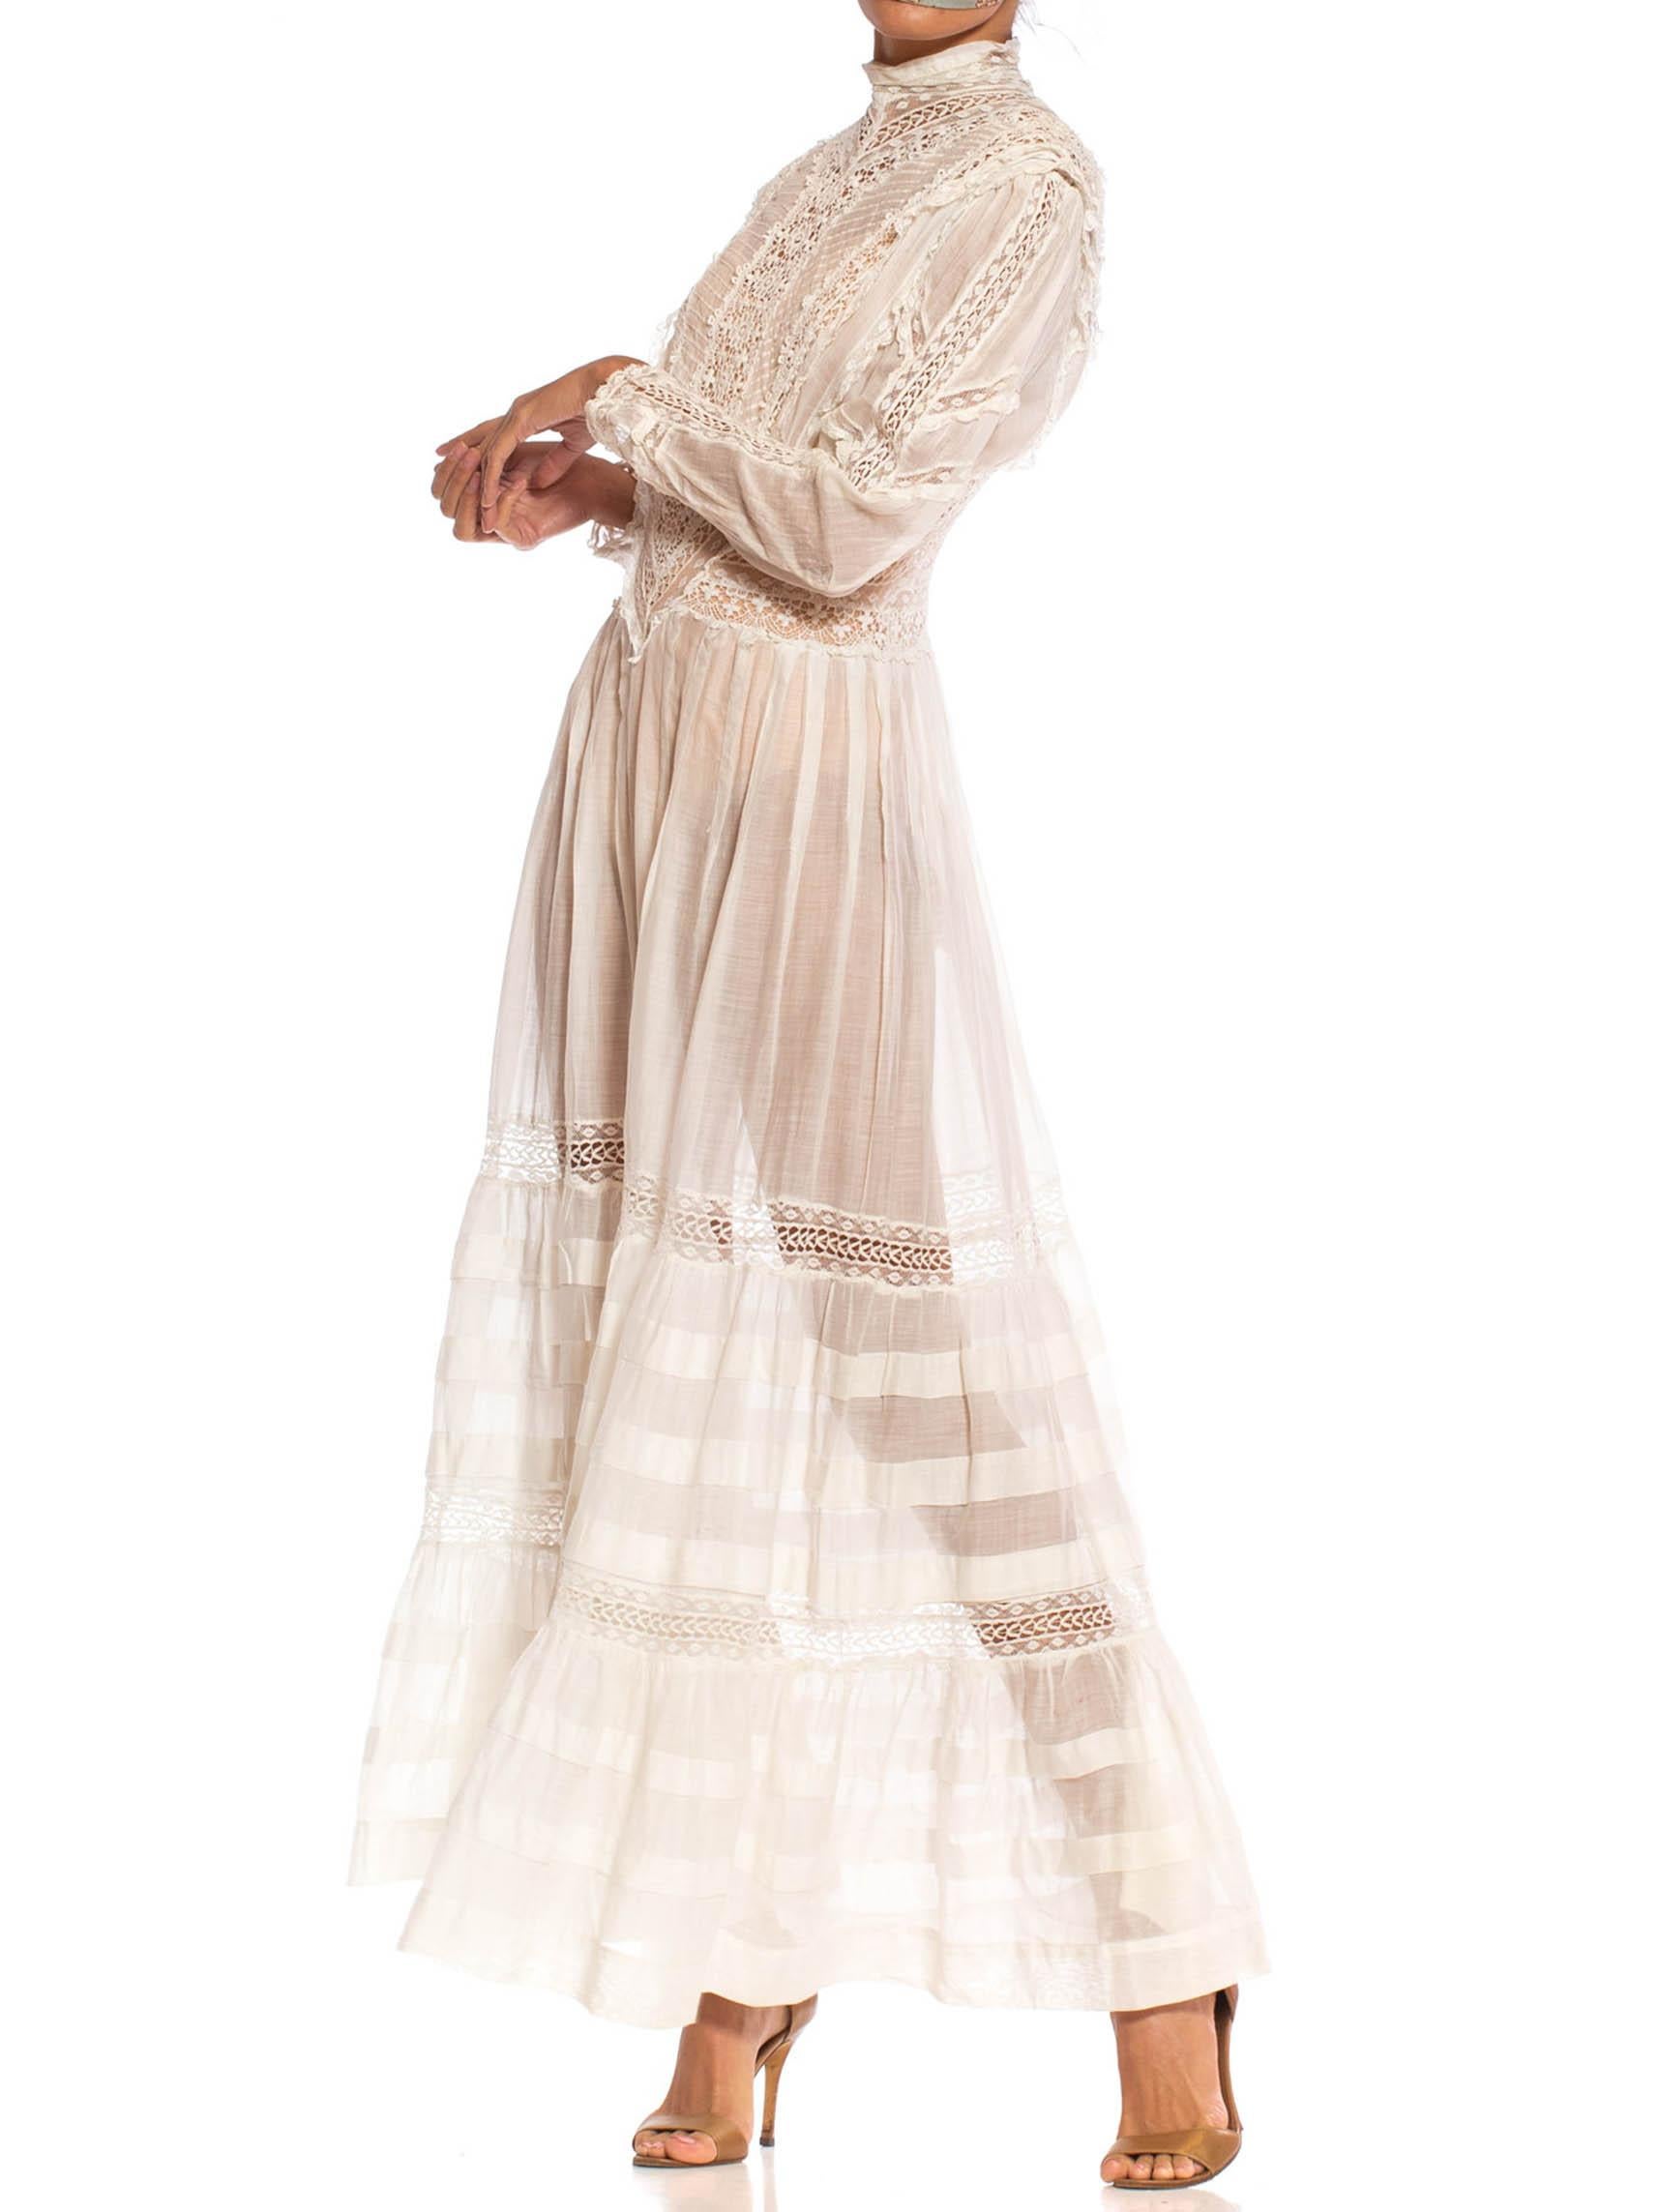 Edwardian White Cotton Voile & Lace Swan Neck Ruffled Long Sleeve Tea Dress 3